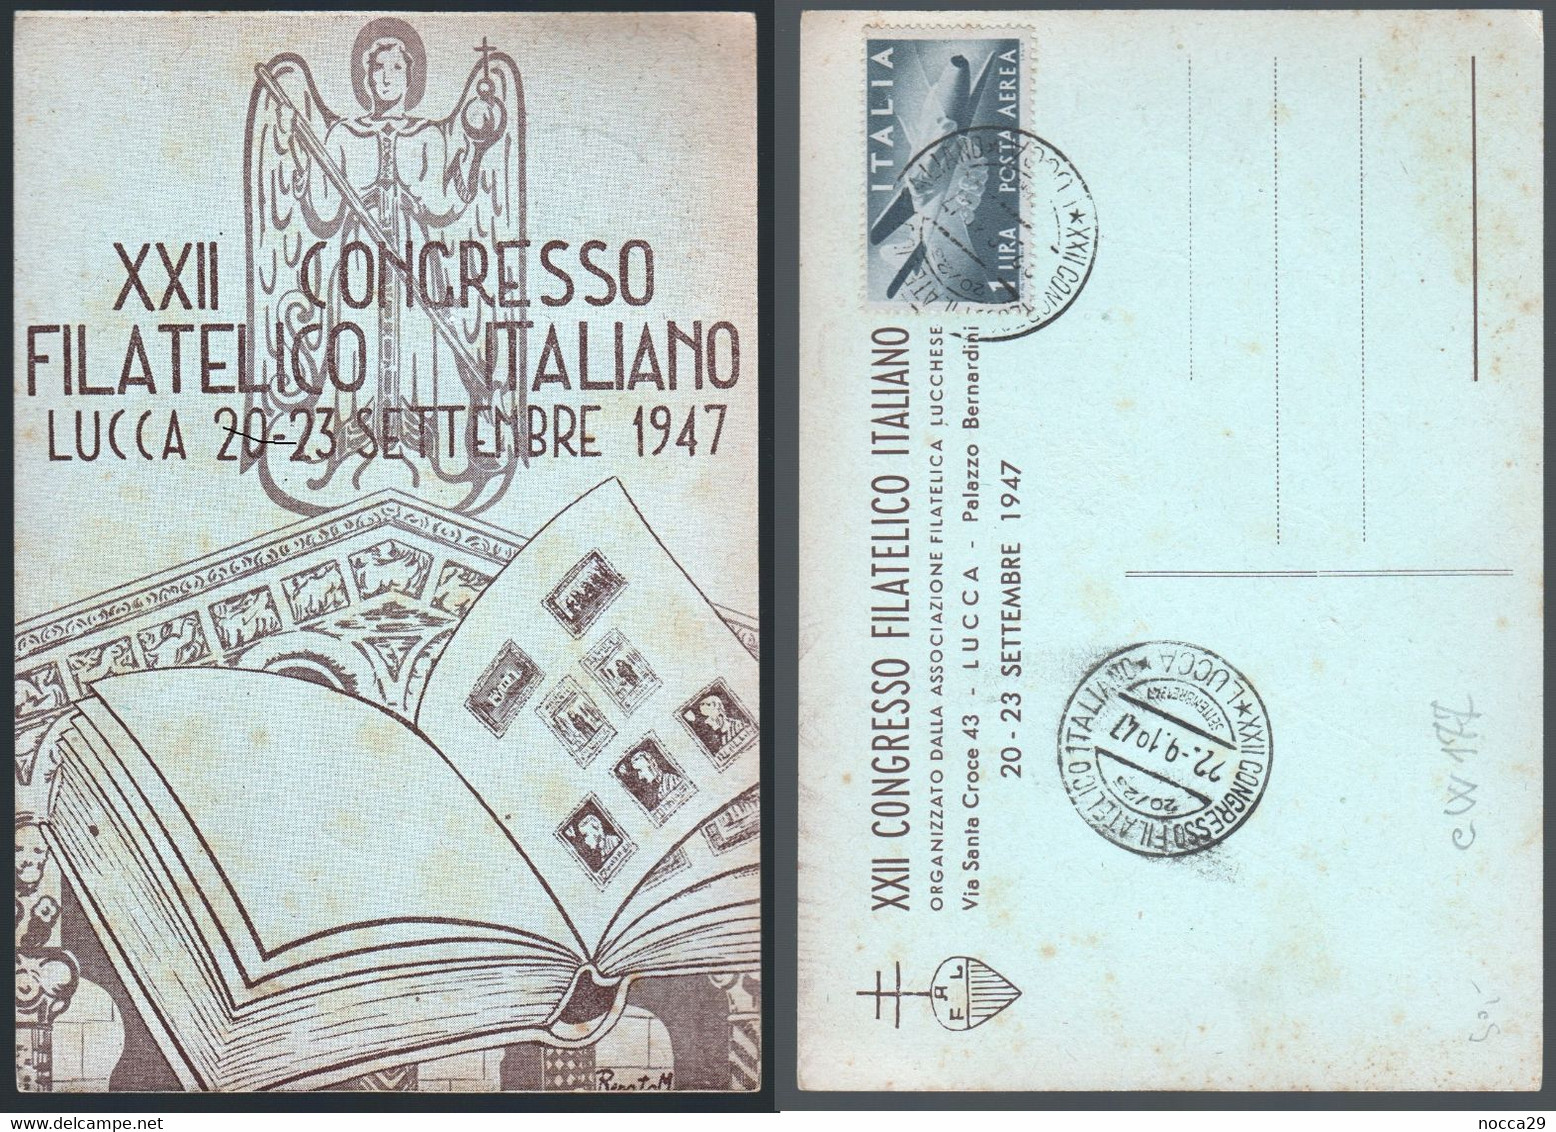 LUCCA - 1947 - CONGRESSO FILATELICO - CARTOLINA COMMEMORATIVA (CW177) - Manifestations